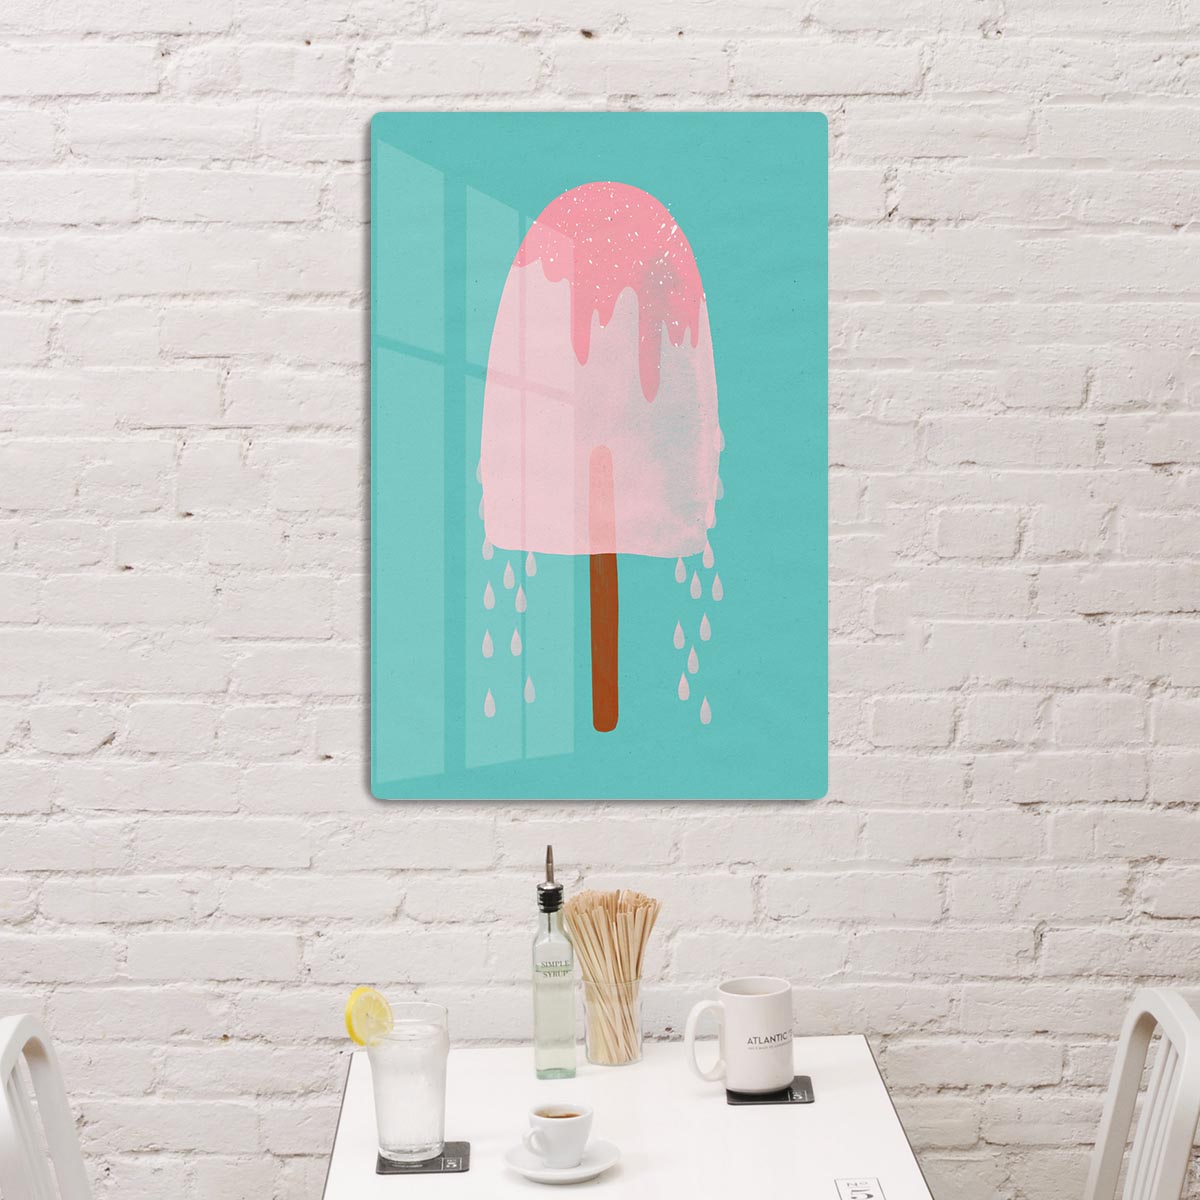 Yummy Ice Cream Acrylic Block - 1x - 3